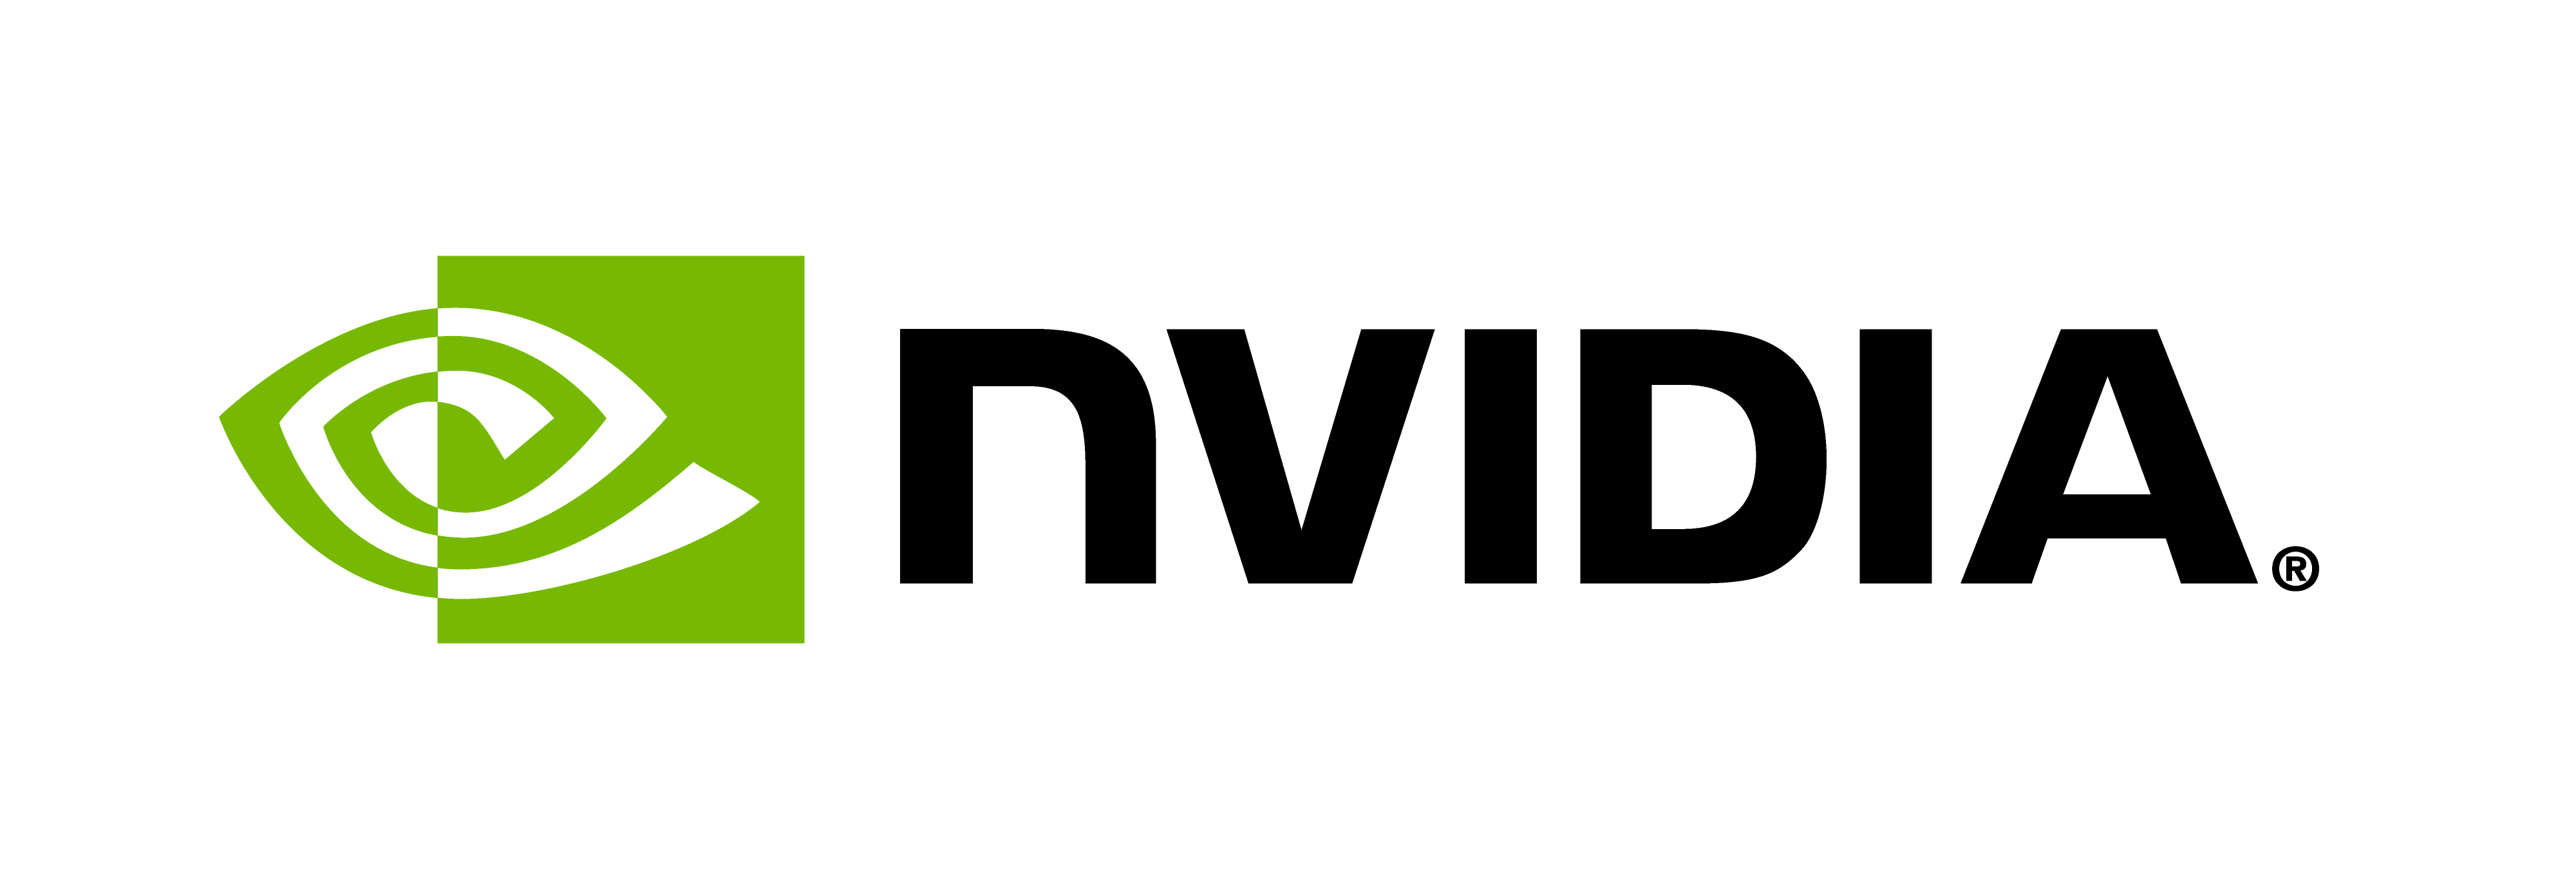 image nvidia logo